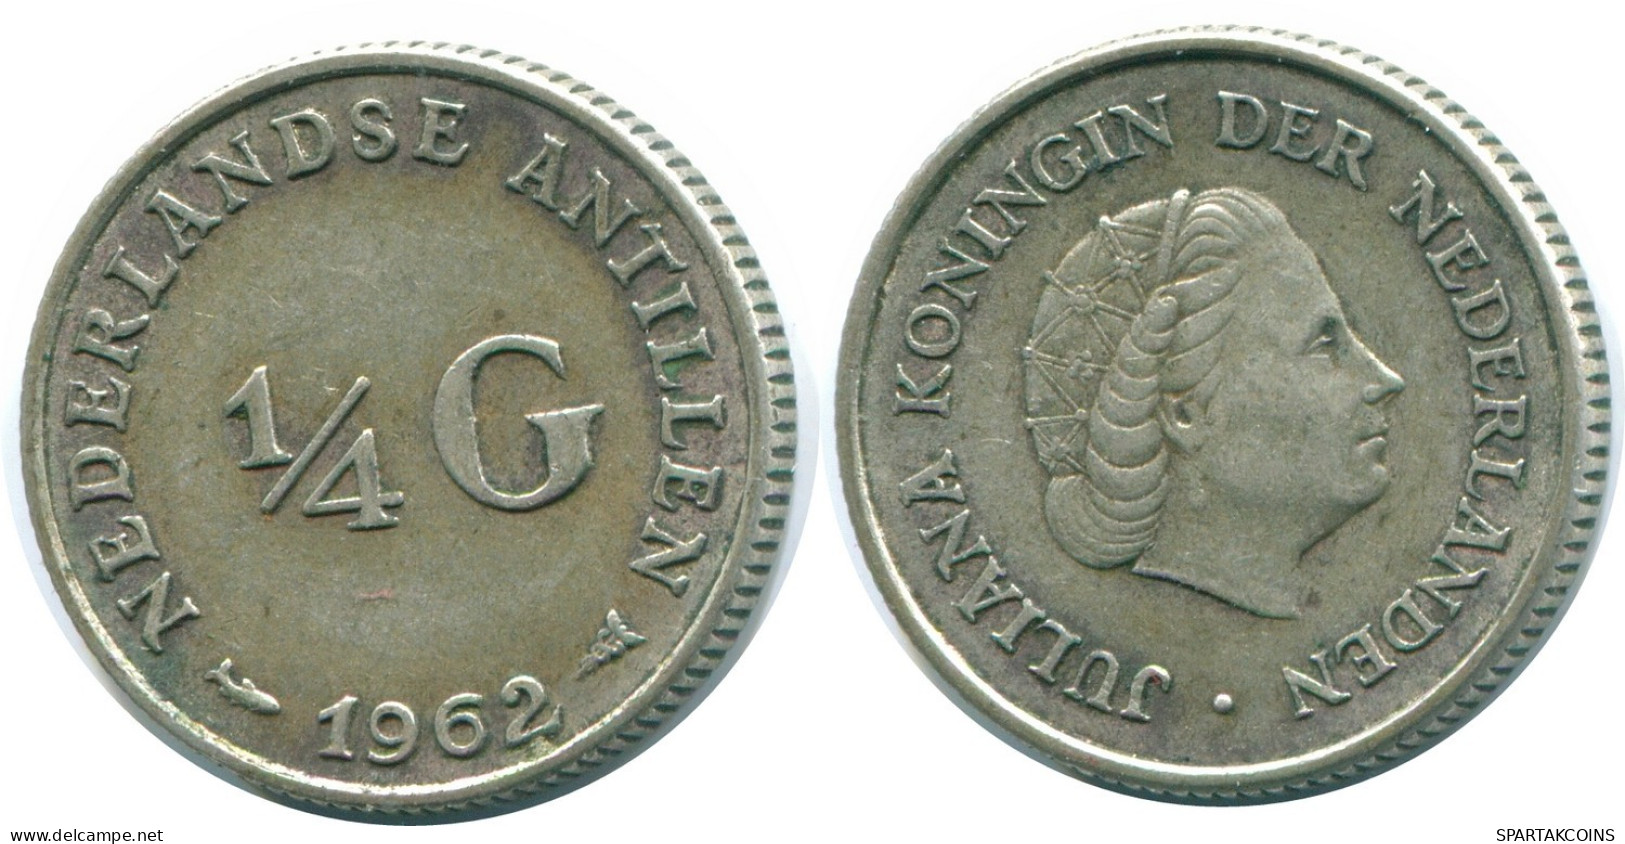 1/4 GULDEN 1962 NIEDERLÄNDISCHE ANTILLEN SILBER Koloniale Münze #NL11156.4.D.A - Netherlands Antilles